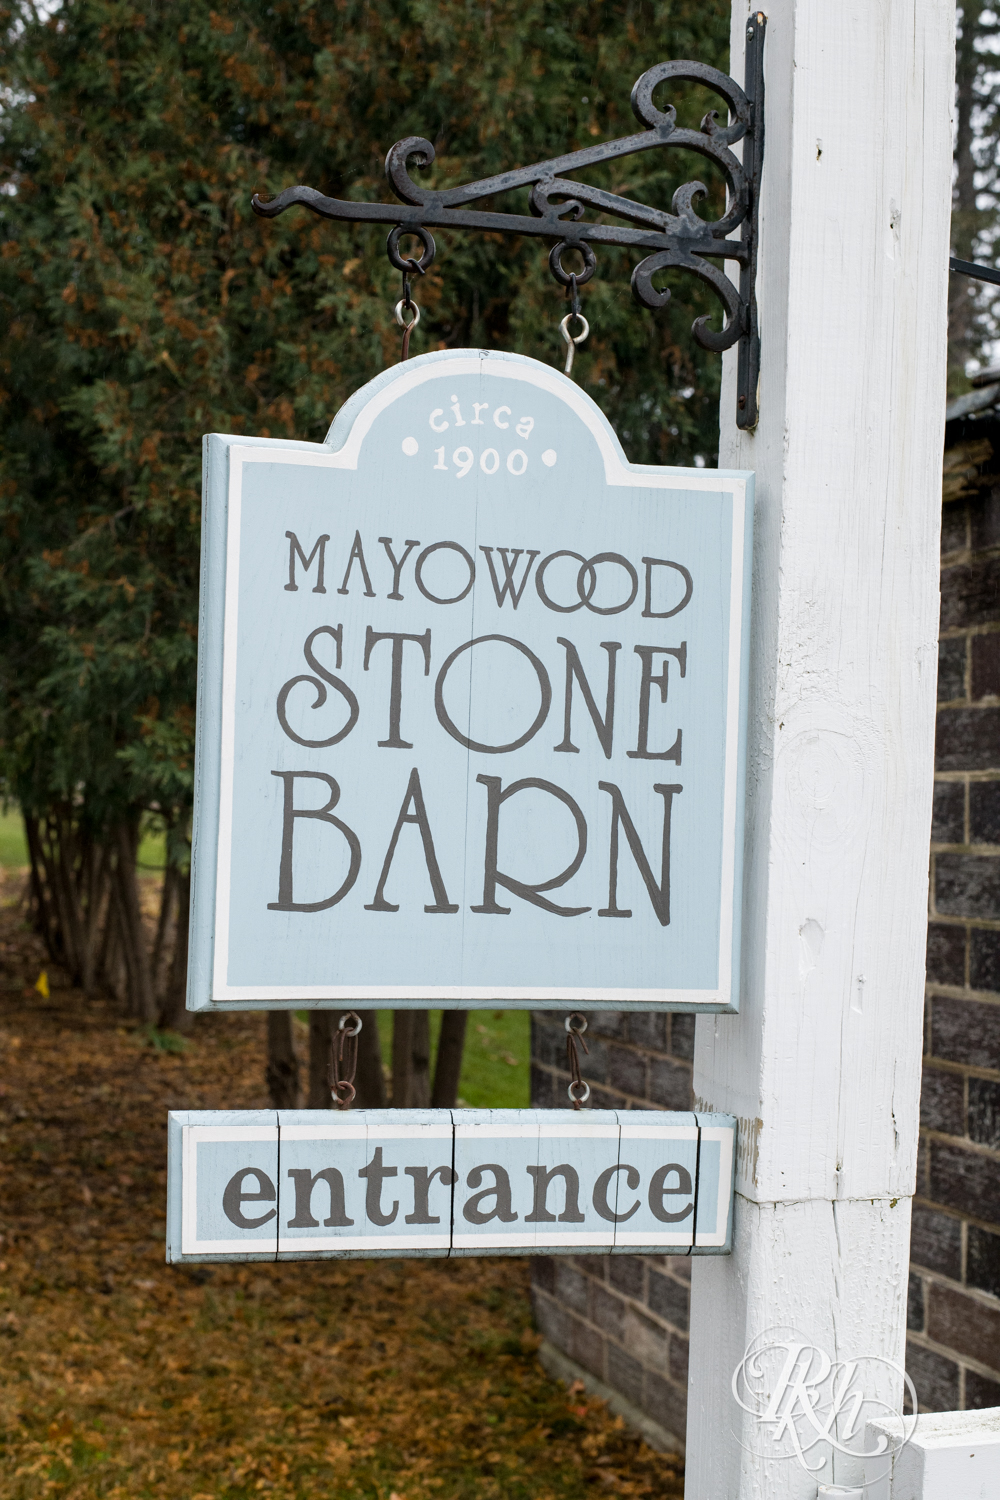 Mayowood Stone Barn entrance sign in Rochester, Minnesota.